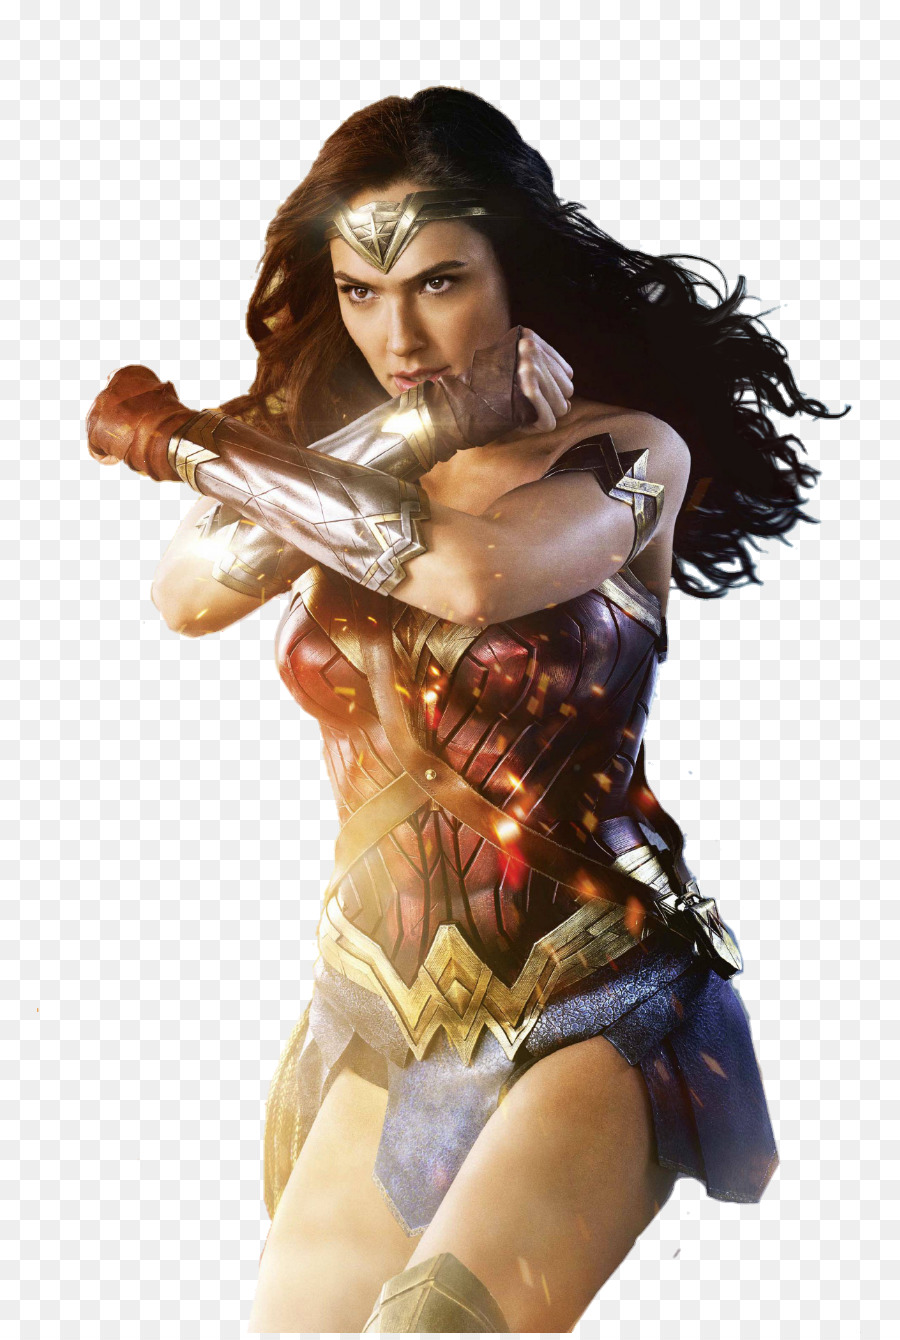 Gal Gadot Diana Prince Wonder Woman Batman Empire - Wonder Woman png download - 825*1333 - Free Transparent Gal Gadot png Download.